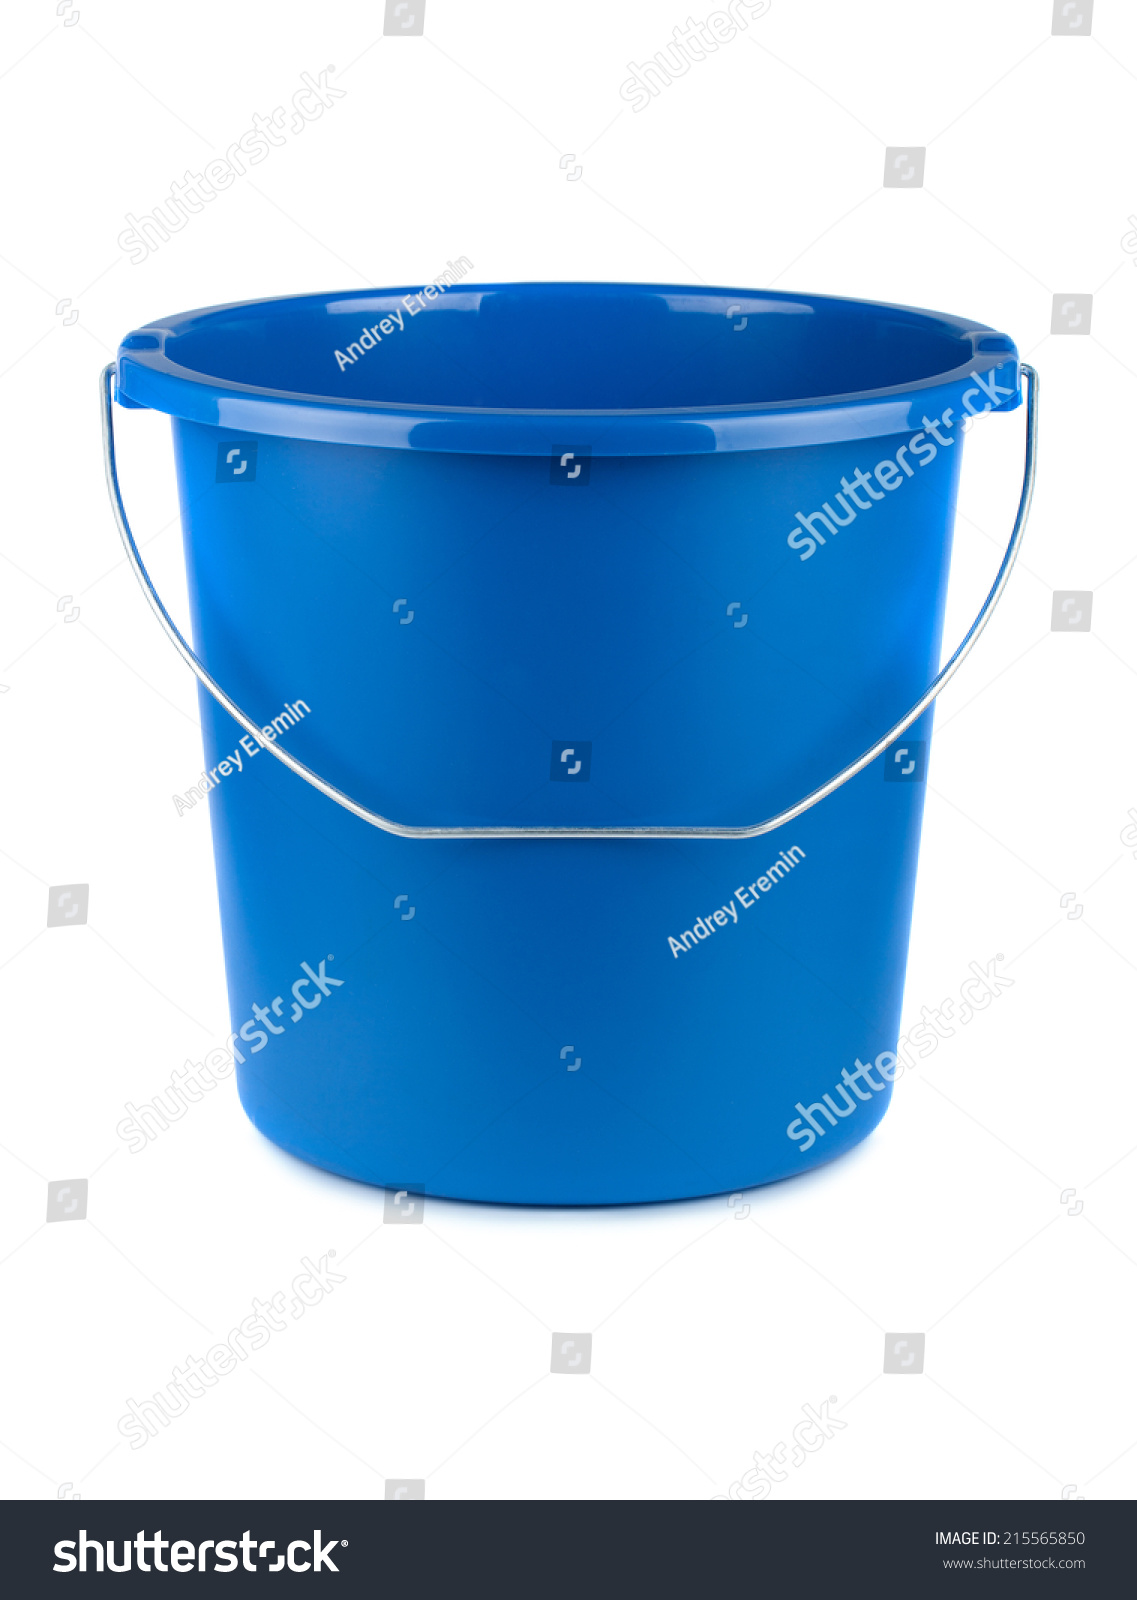 Round Small Blue Plastic Bucket On Stock Photo 1341239978